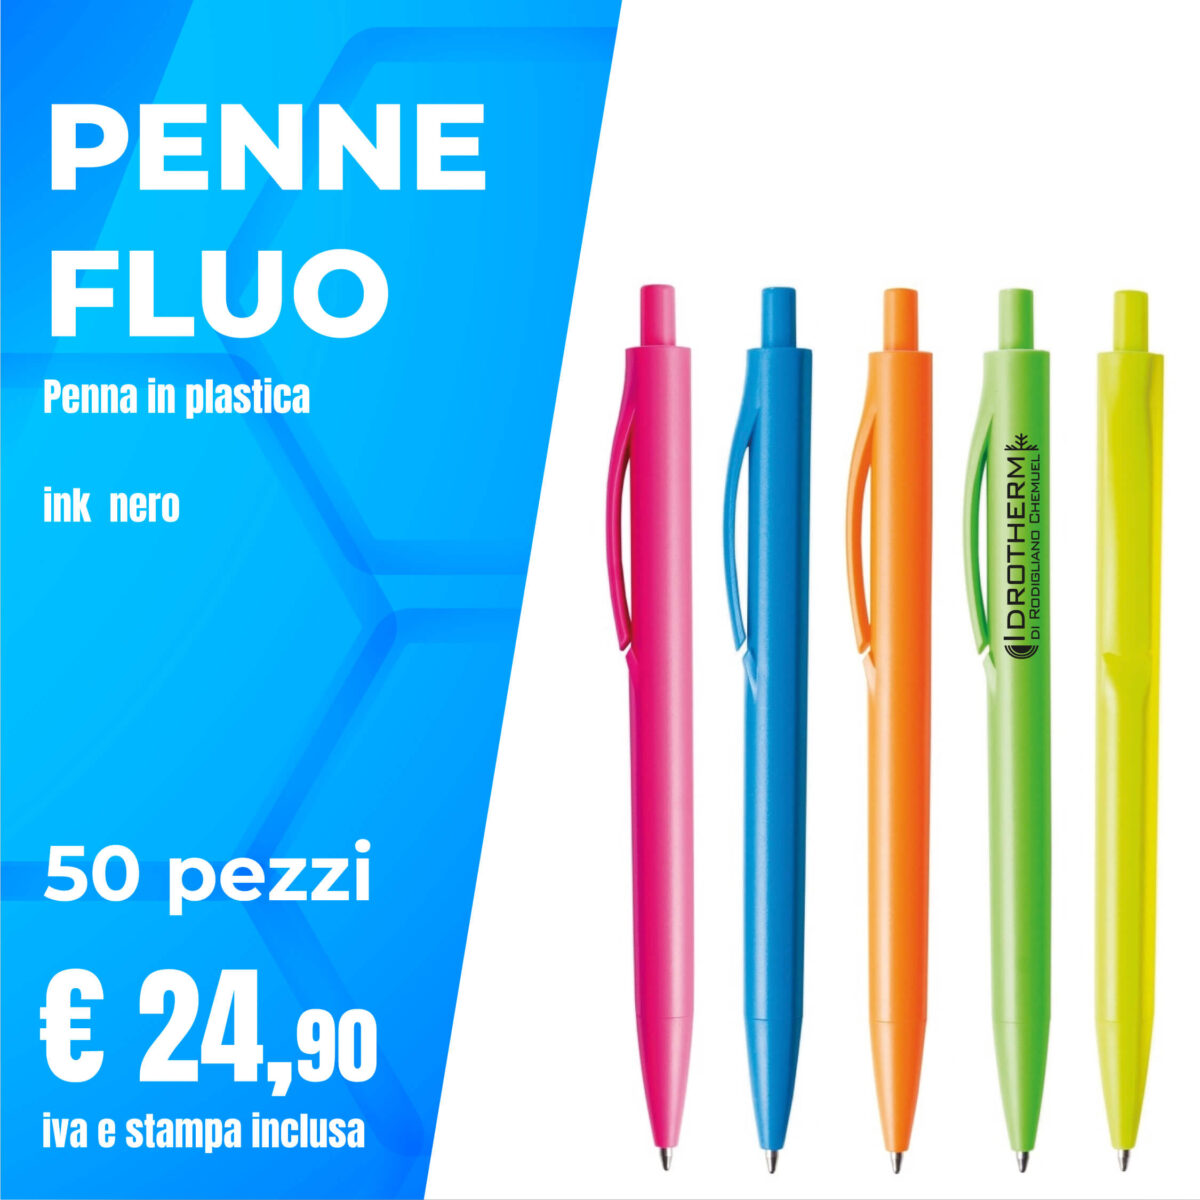 Penne Fluo kit 50 pezzi